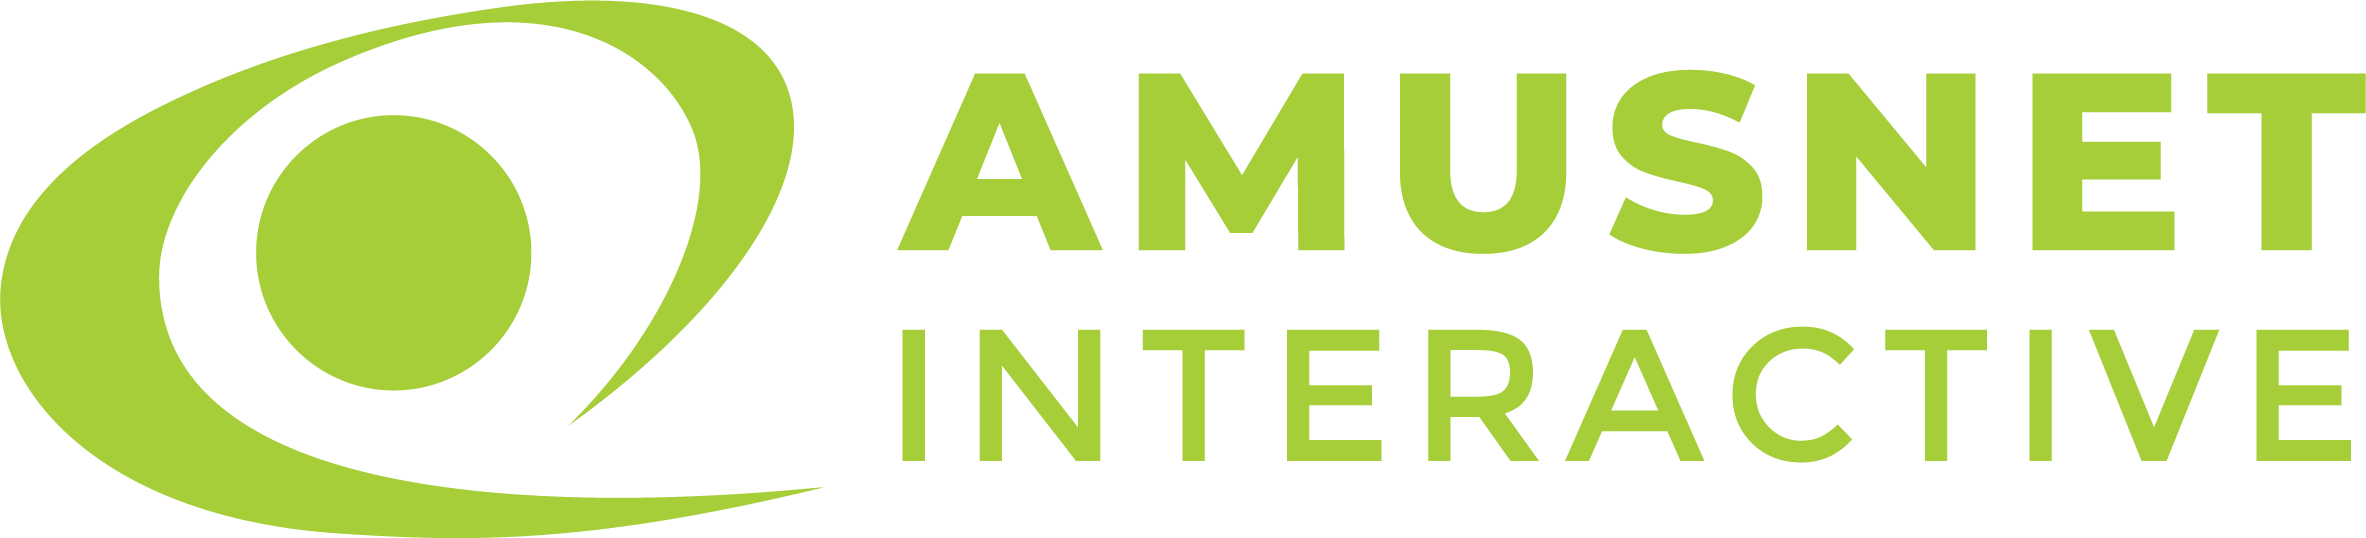 Amusnet Interactive (former EGT Interactive) jogos